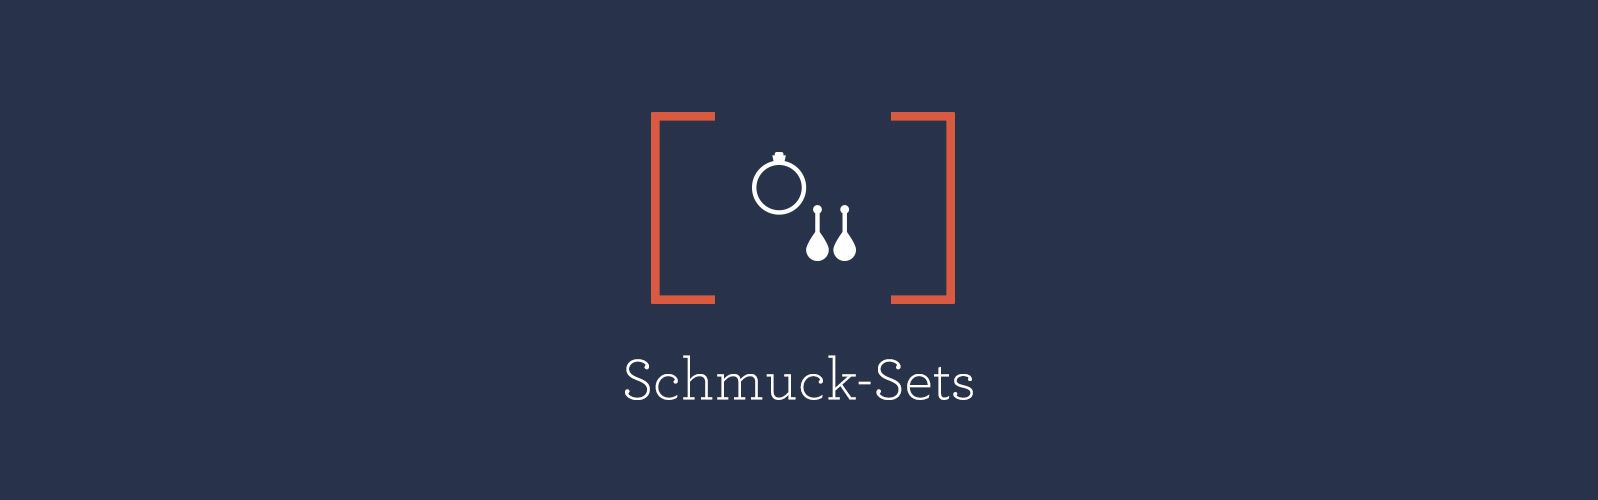 Schmuck-Sets